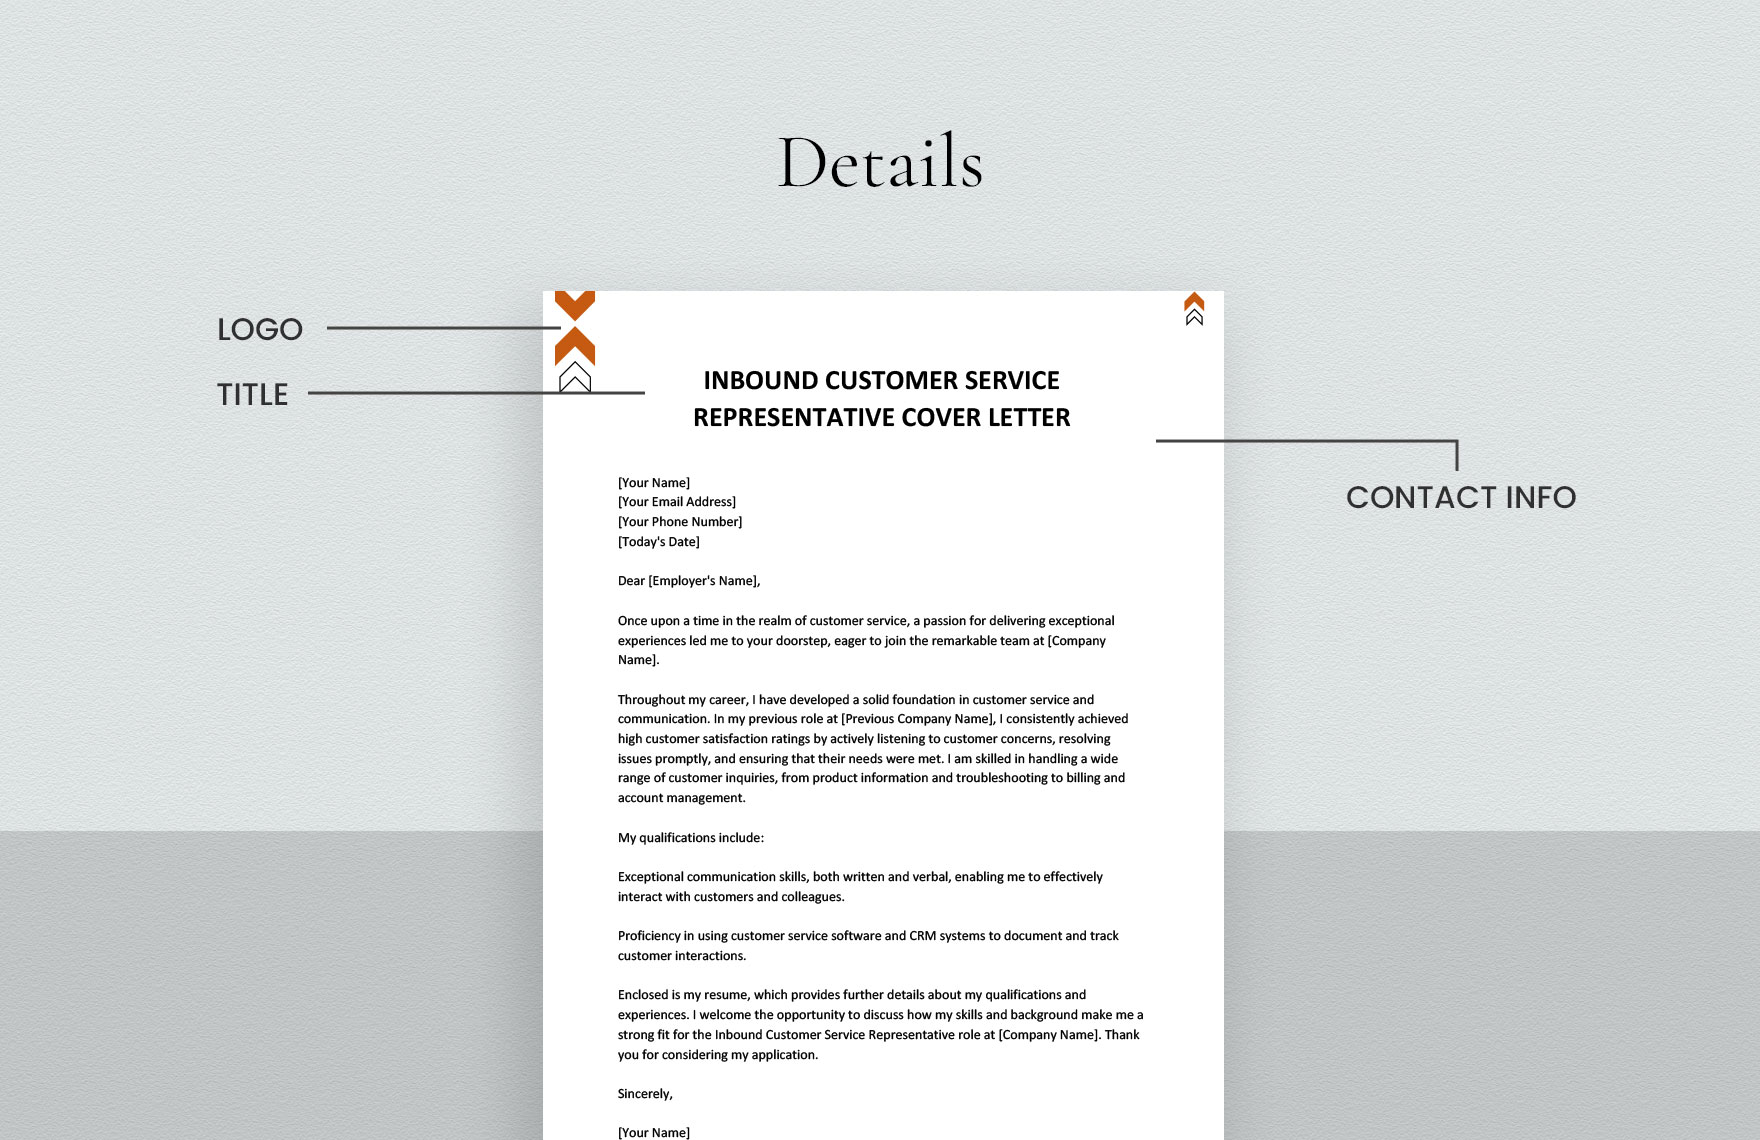 Inbound Customer Service Representative Cover Letter